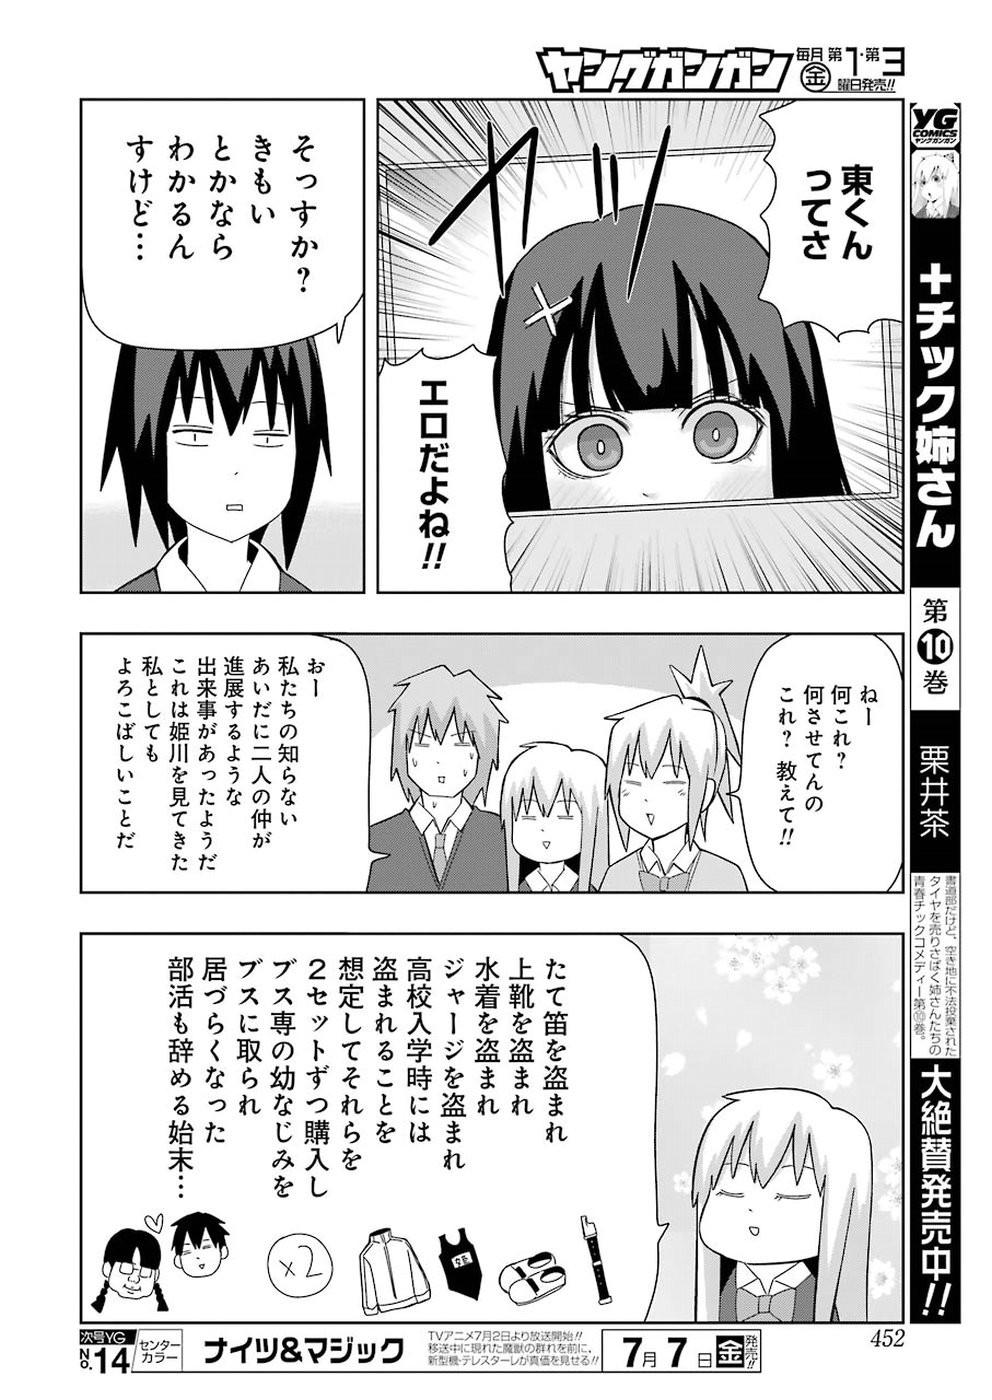 Tic Nee San Chapter 148 Page 8 Raw Sen Manga